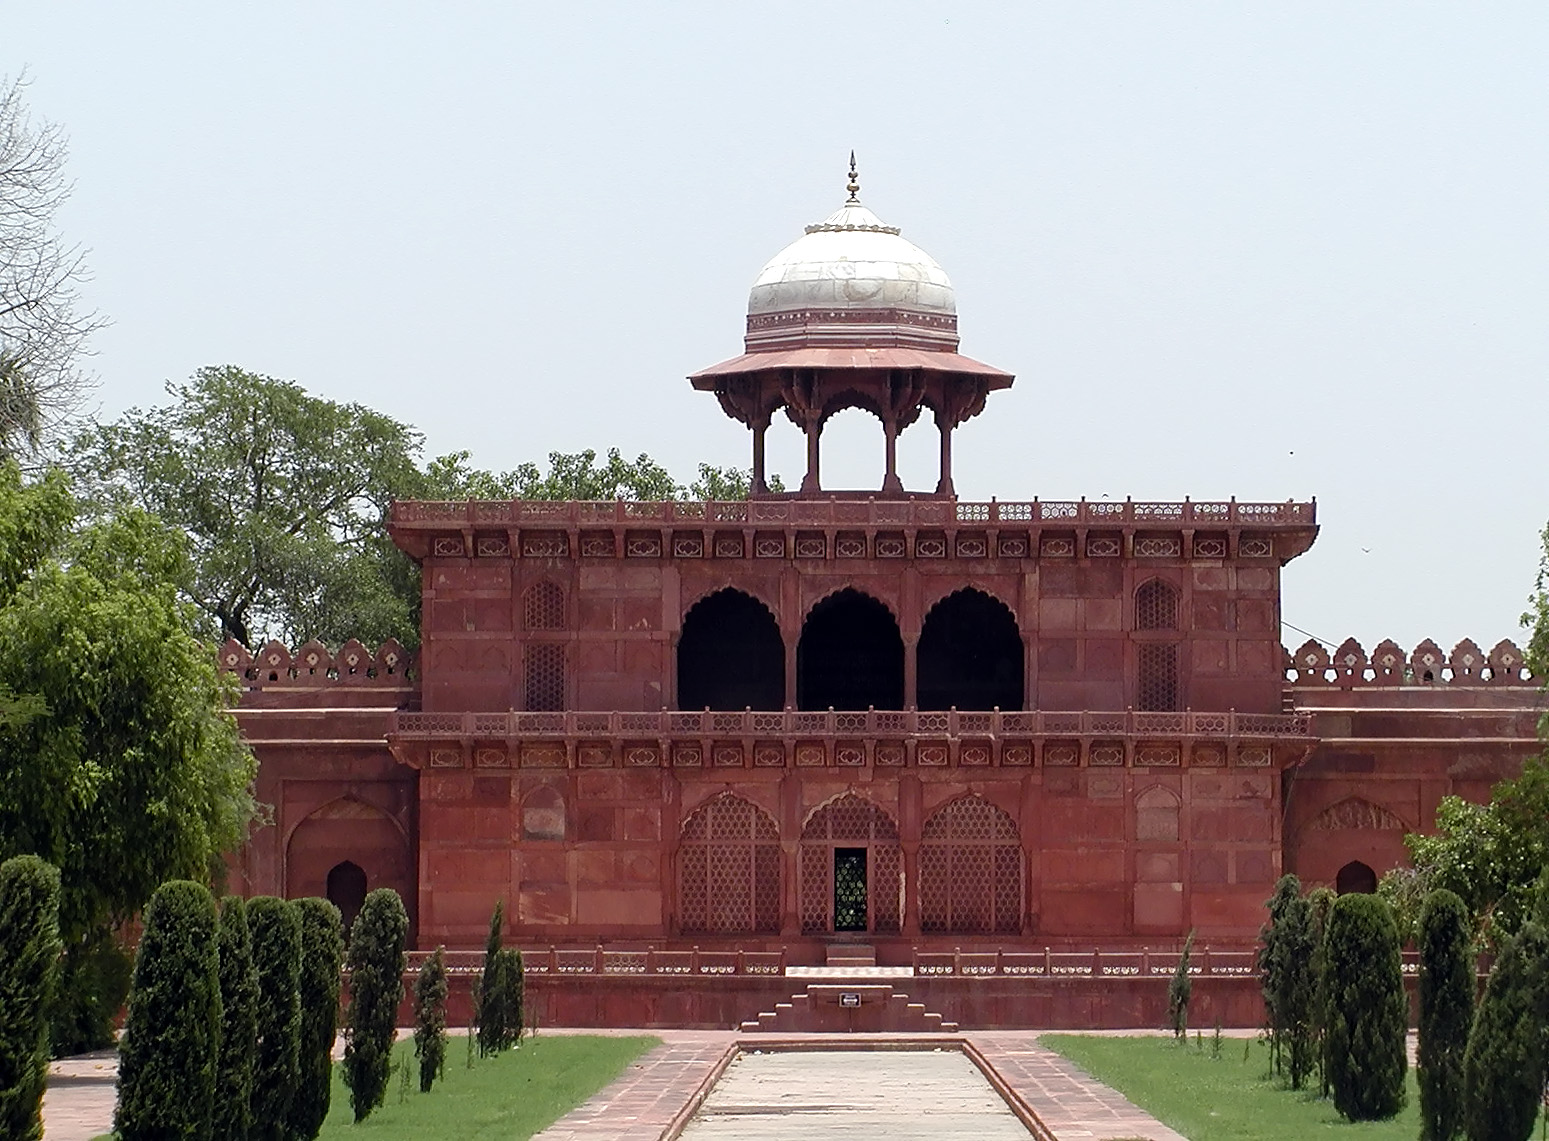 10-Jun-2001 12:24 - Agra - The Taj Mahal - Building to the East of the gardens